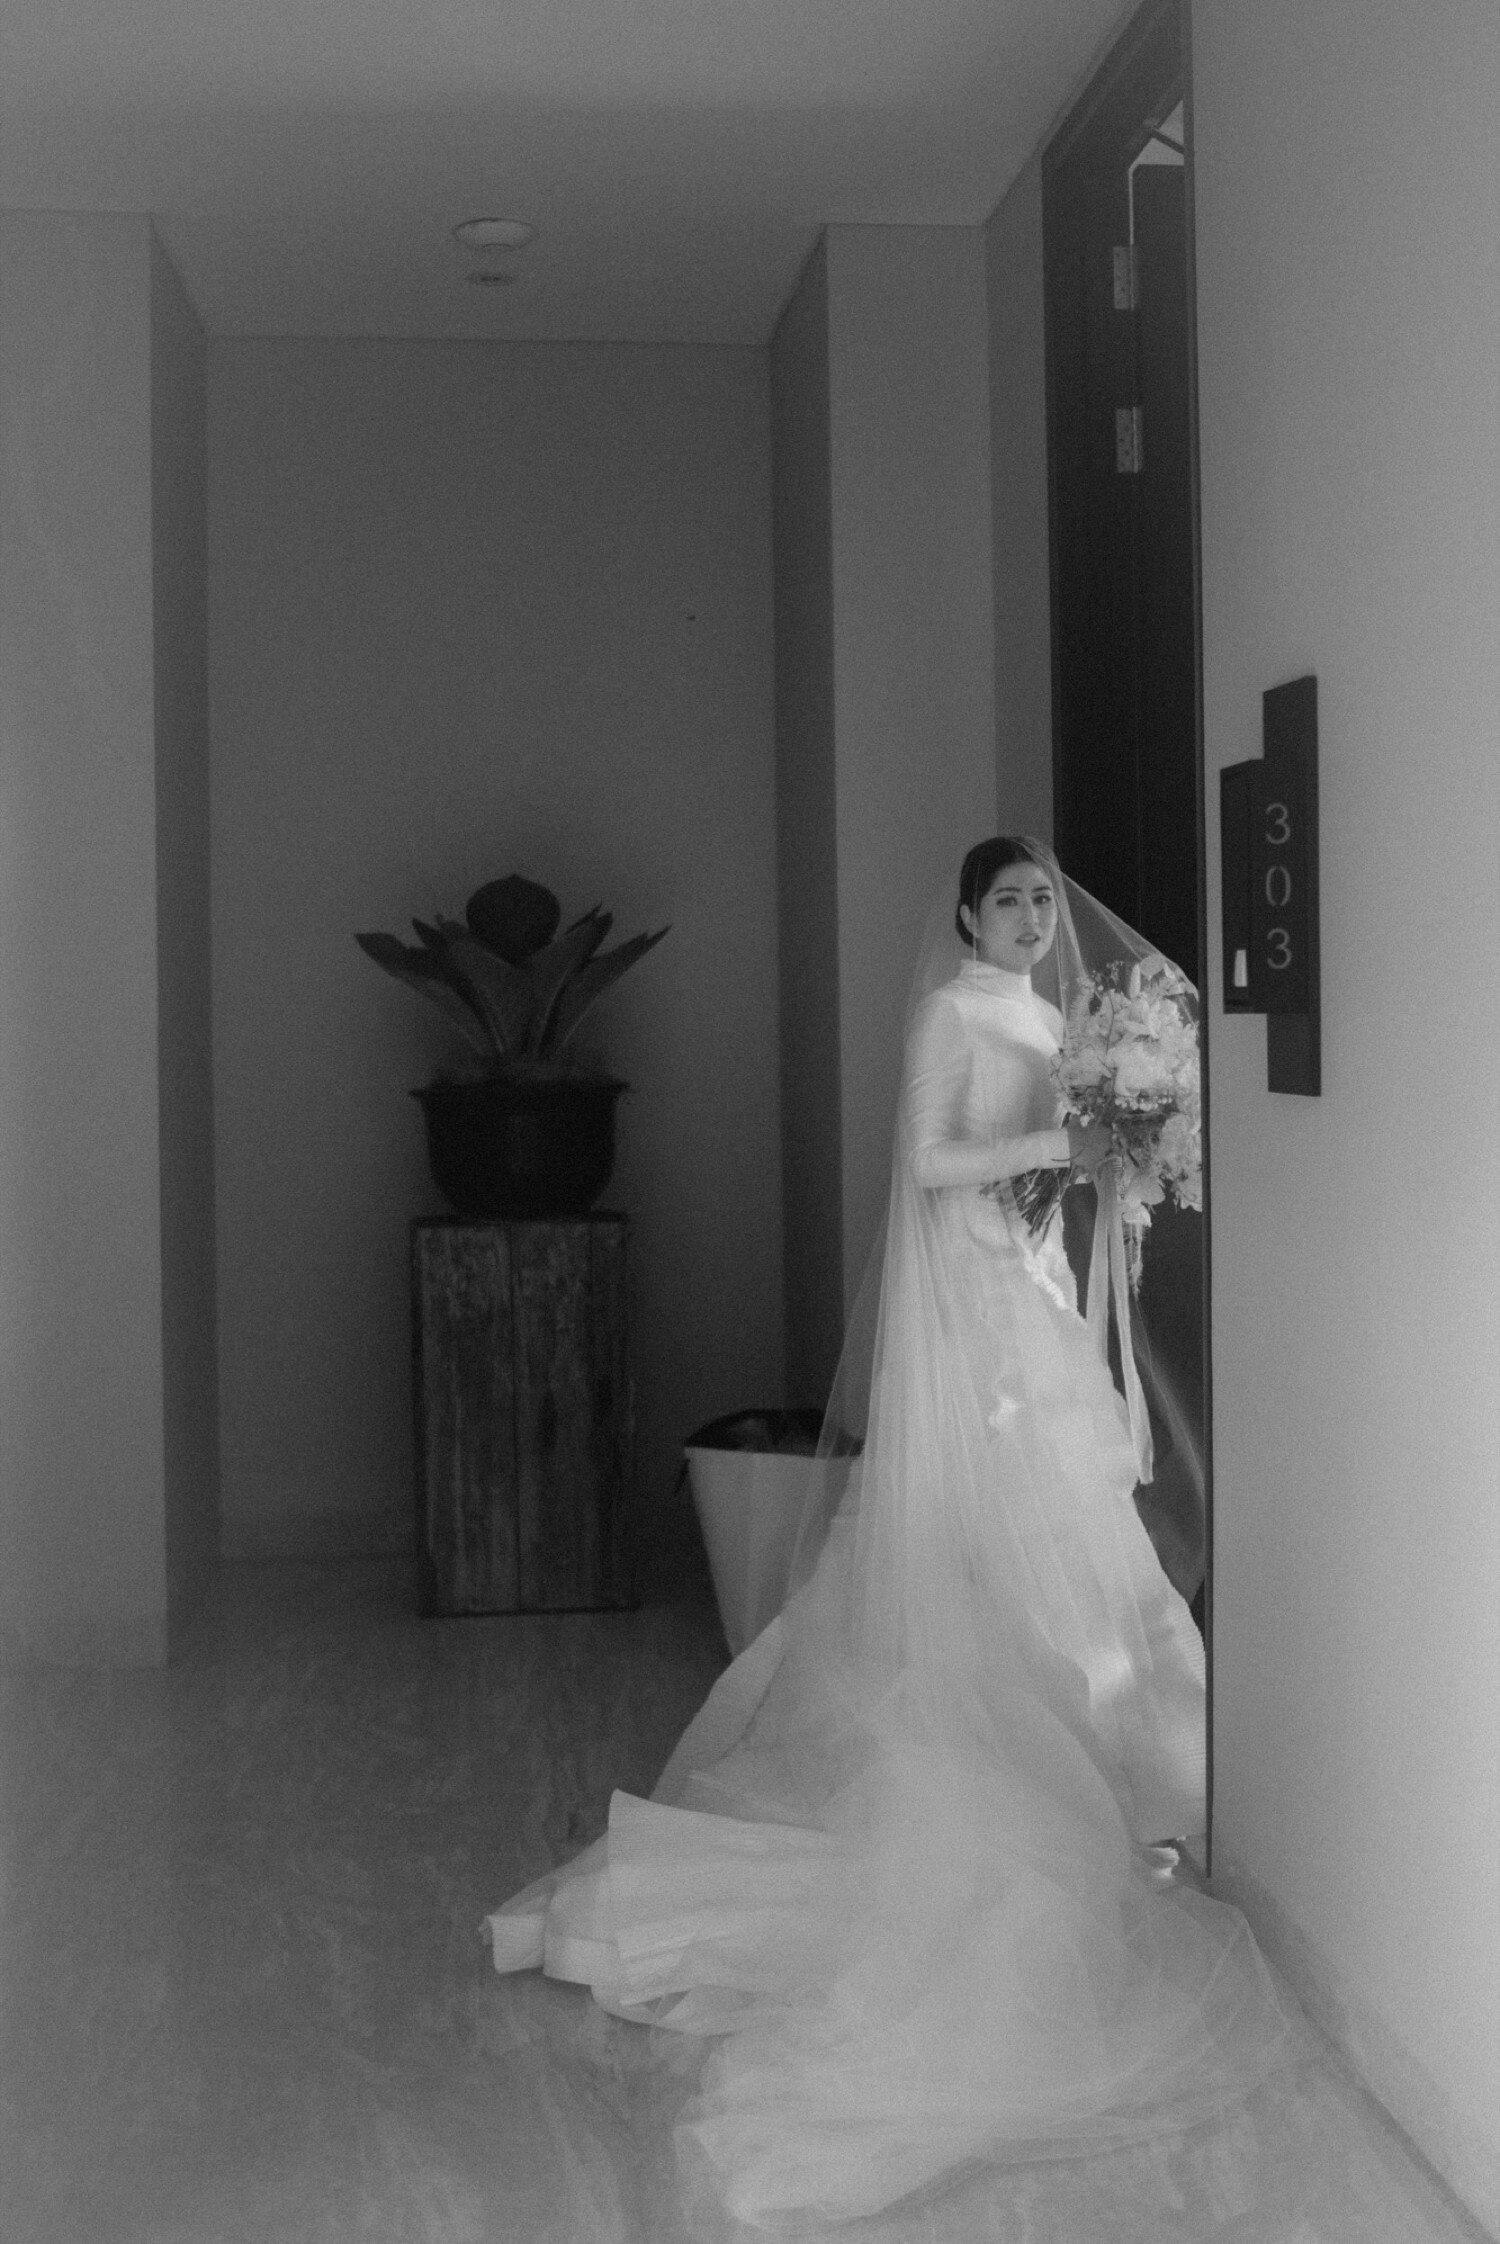 rius elwiana amaryllis bogor yefta gunawan wedding dress andy chun my voila carol kuntjoro wedding photography-33.jpg